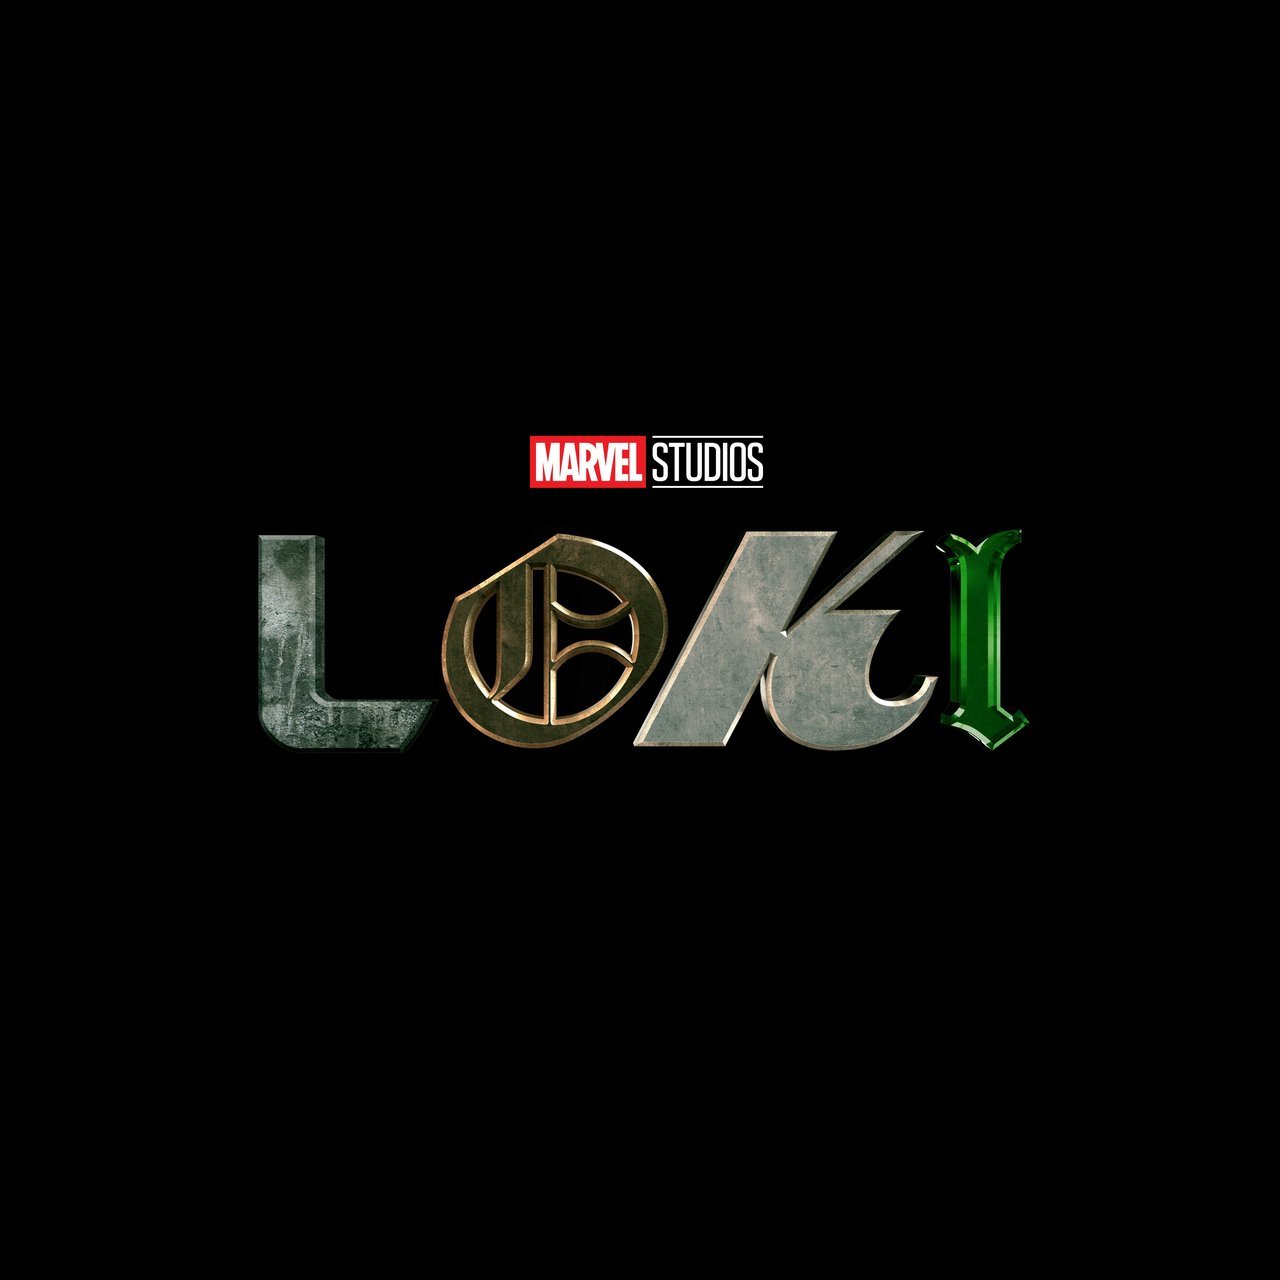 theavengers:
“MARVEL STUDIOS’ “LOKI”
Cast: Tom Hiddleston.
Release date: Spring, 2021 (Disney+)
”
Shut up and take my money Disney+ 💰💰